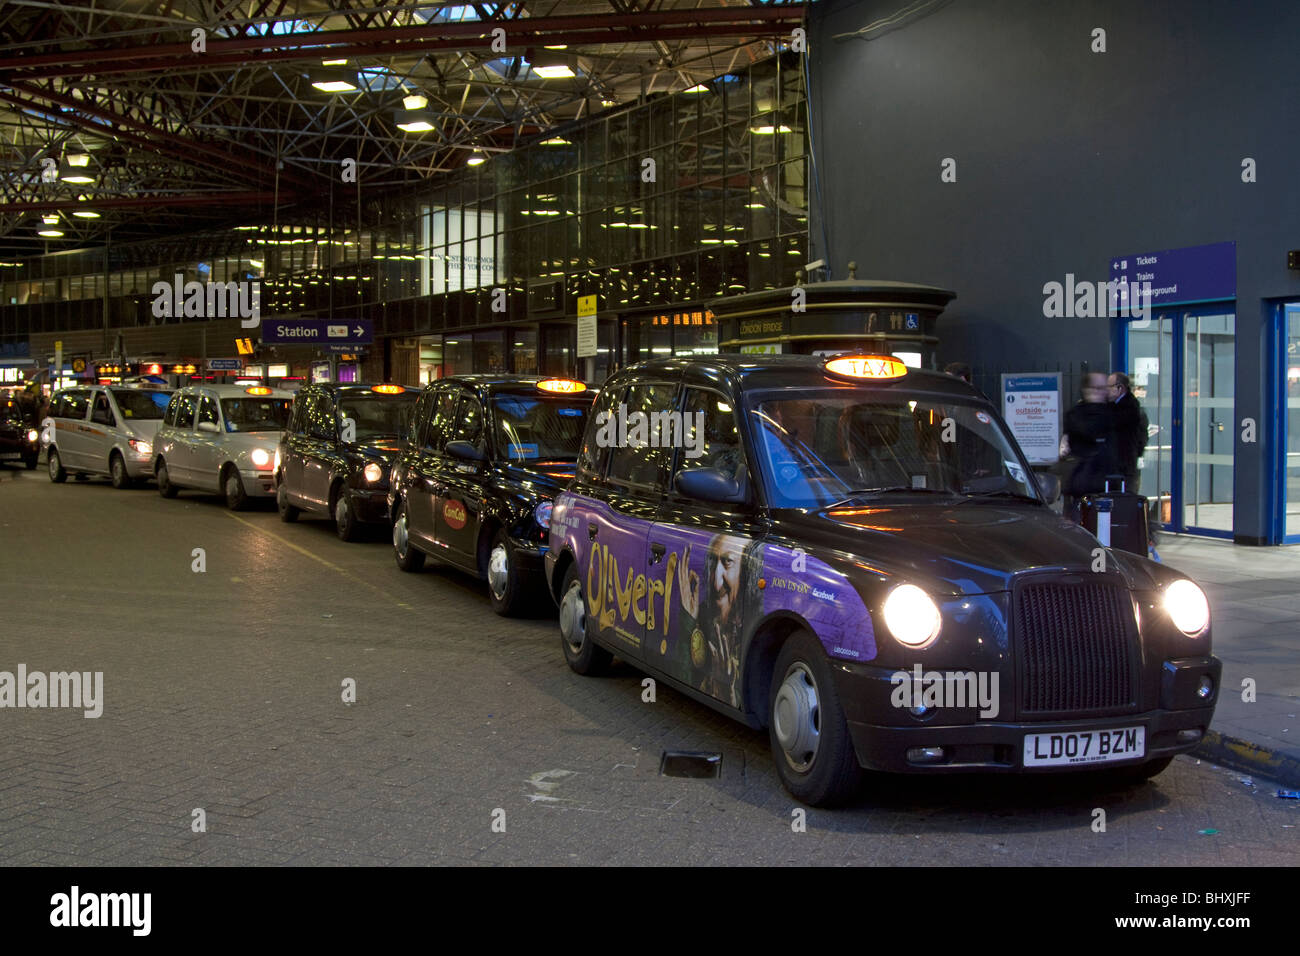 Taxi Rank London Bridge Station Southwark Stock Photo